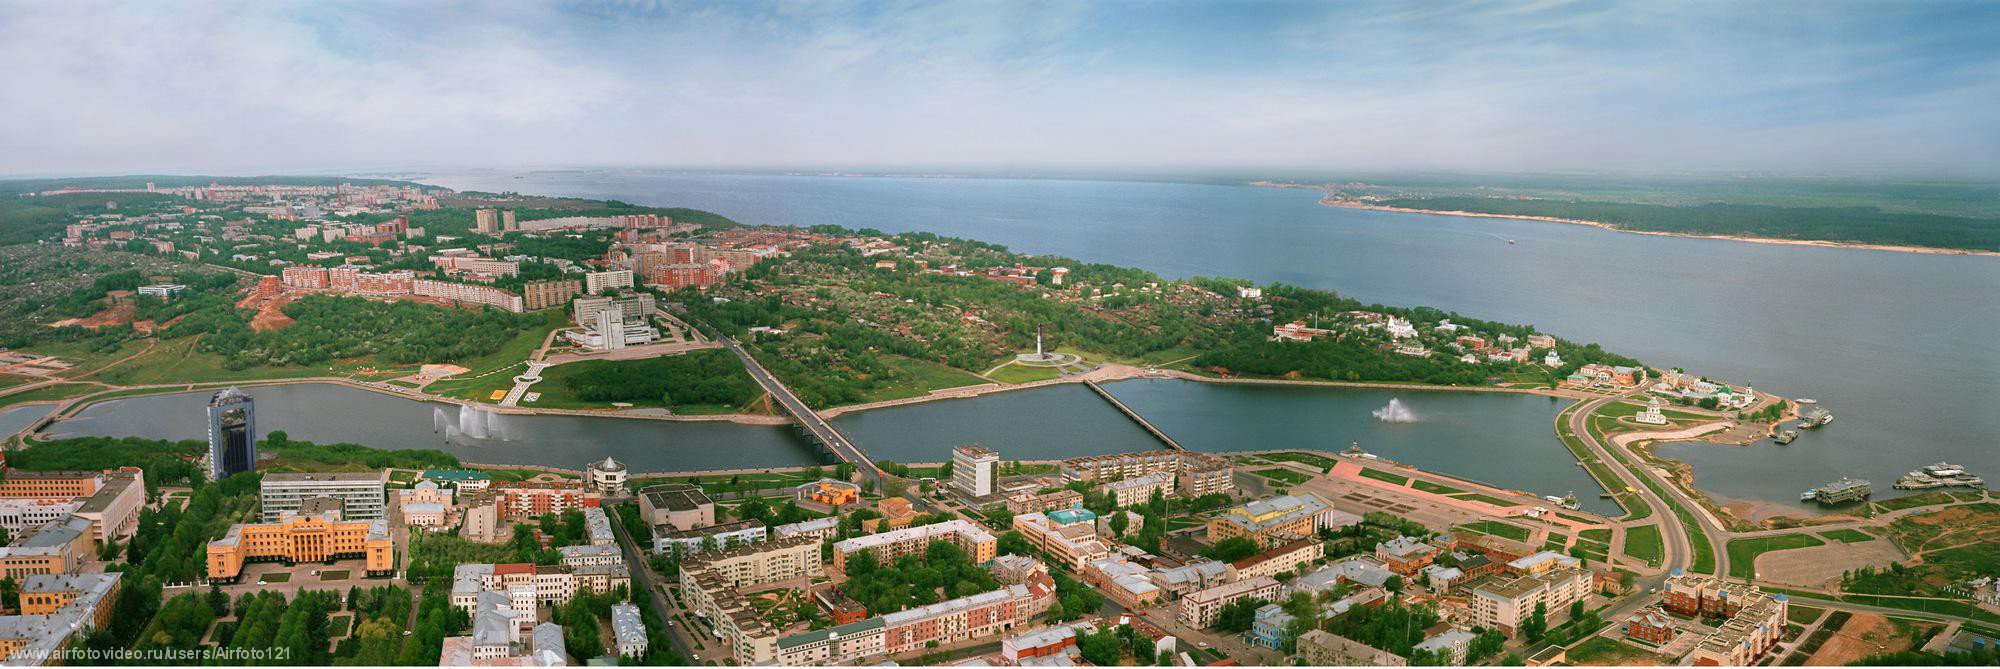 Сколько людей живет в чебоксарах. Залив Чебоксары. Чувашия залив Чебоксары. Чебоксары Волга залив. Чебоксары залив панорама.